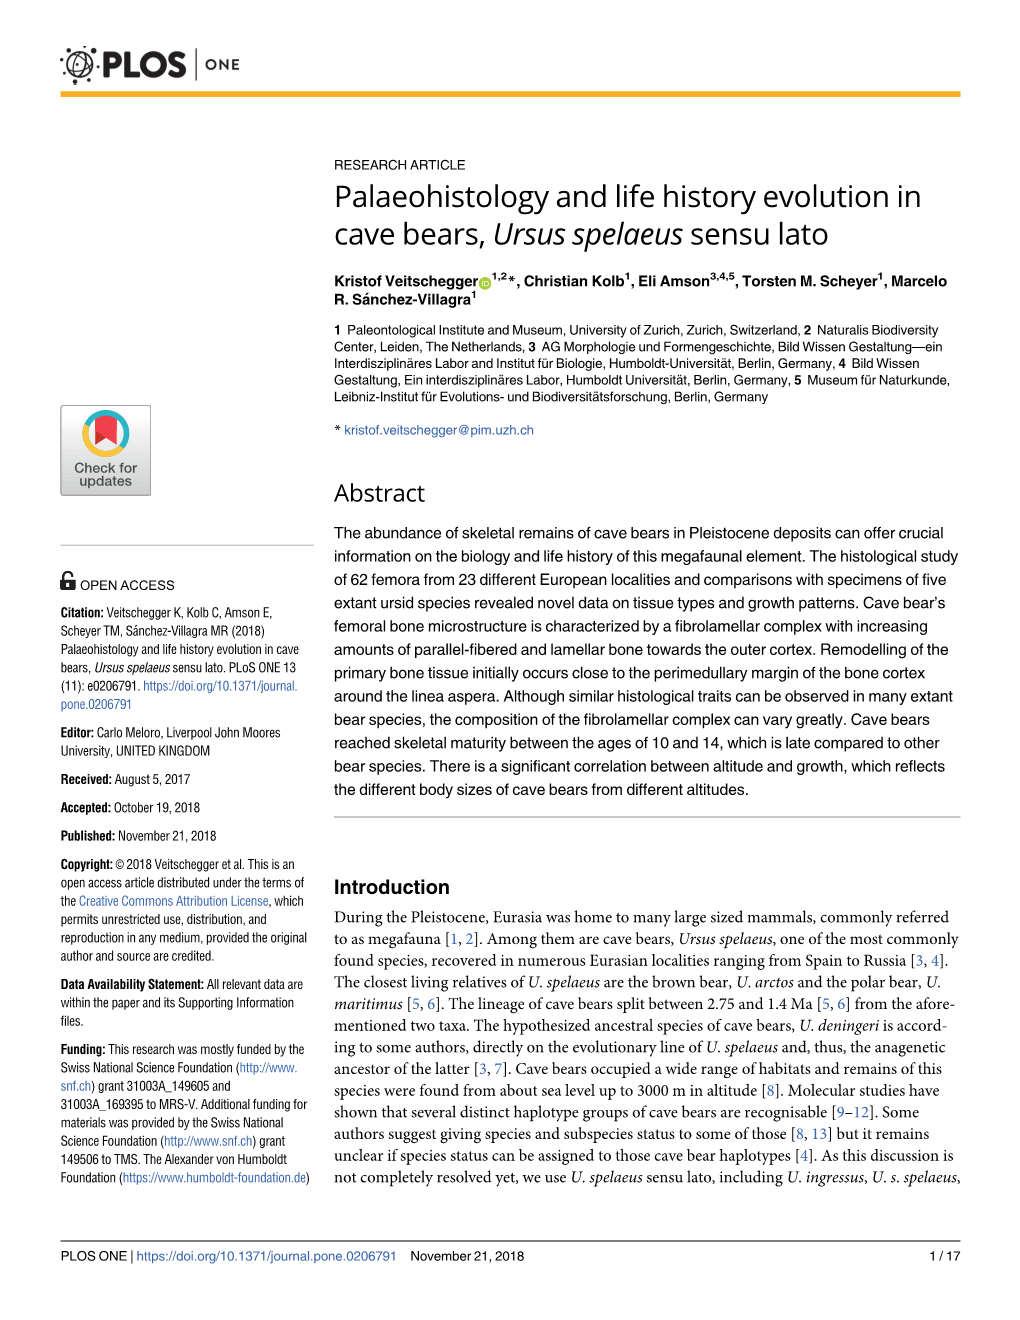 Palaeohistology and Life History Evolution in Cave Bears, Ursus Spelaeus Sensu Lato